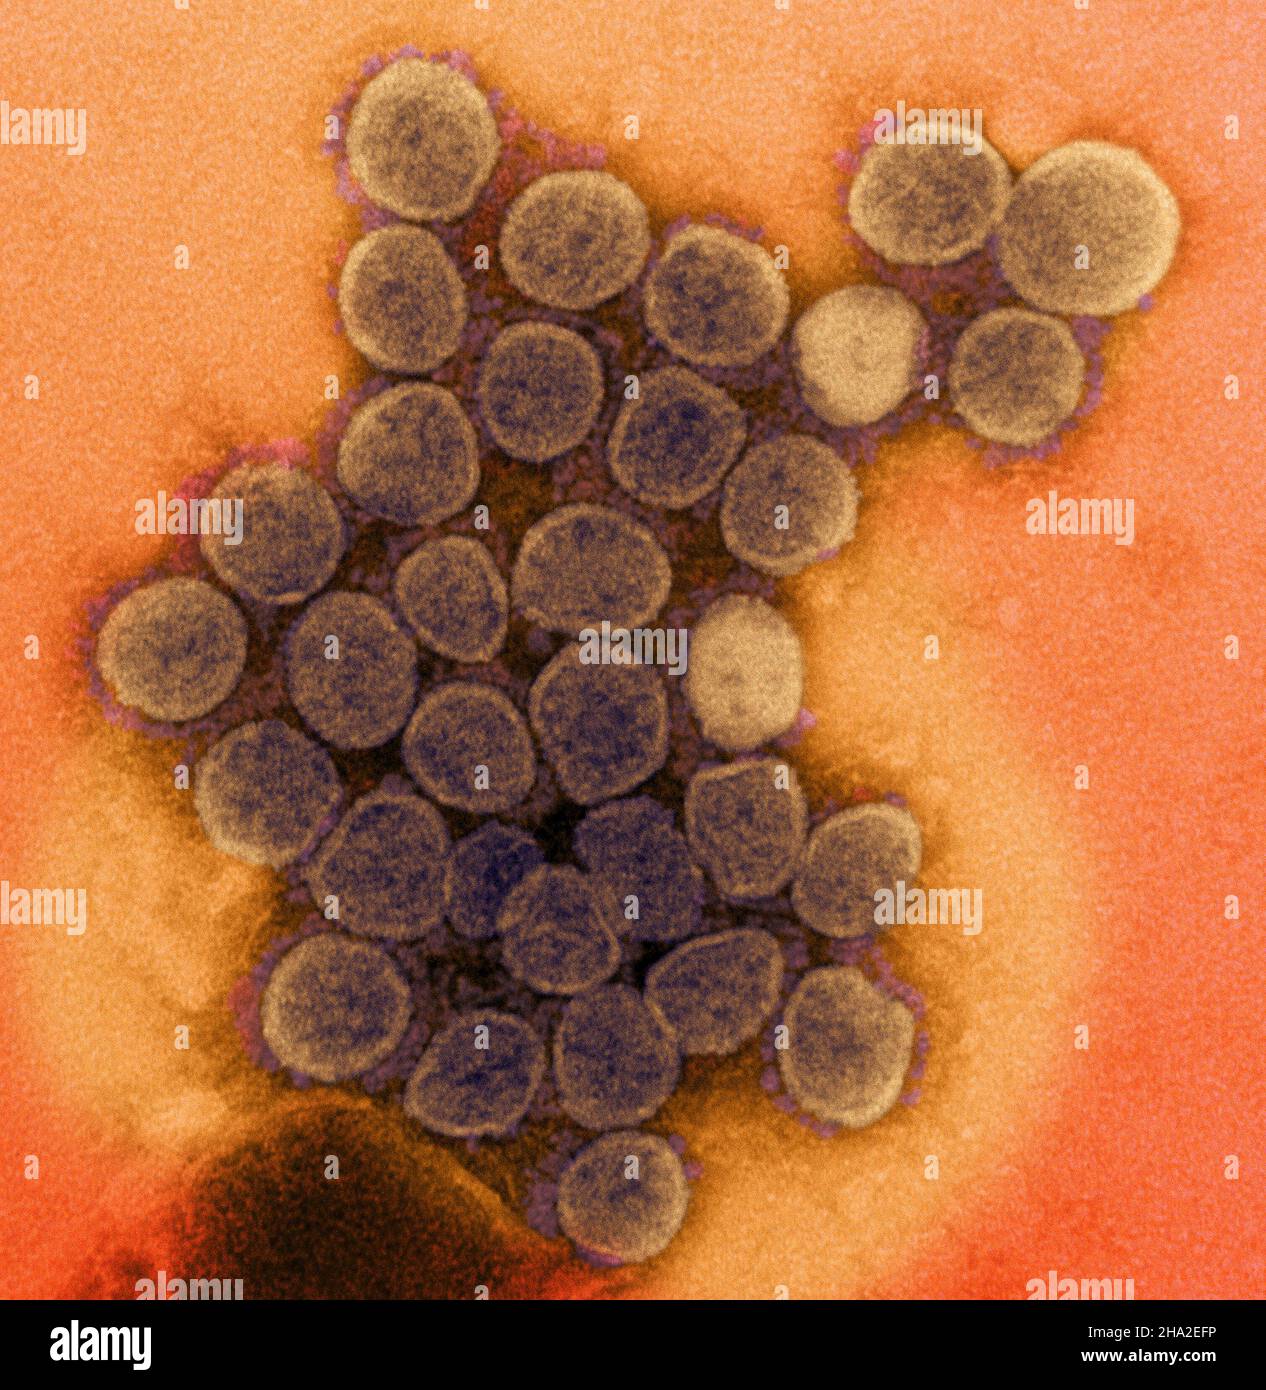 Novel coronavirus sars-cov-2 Stock Photo